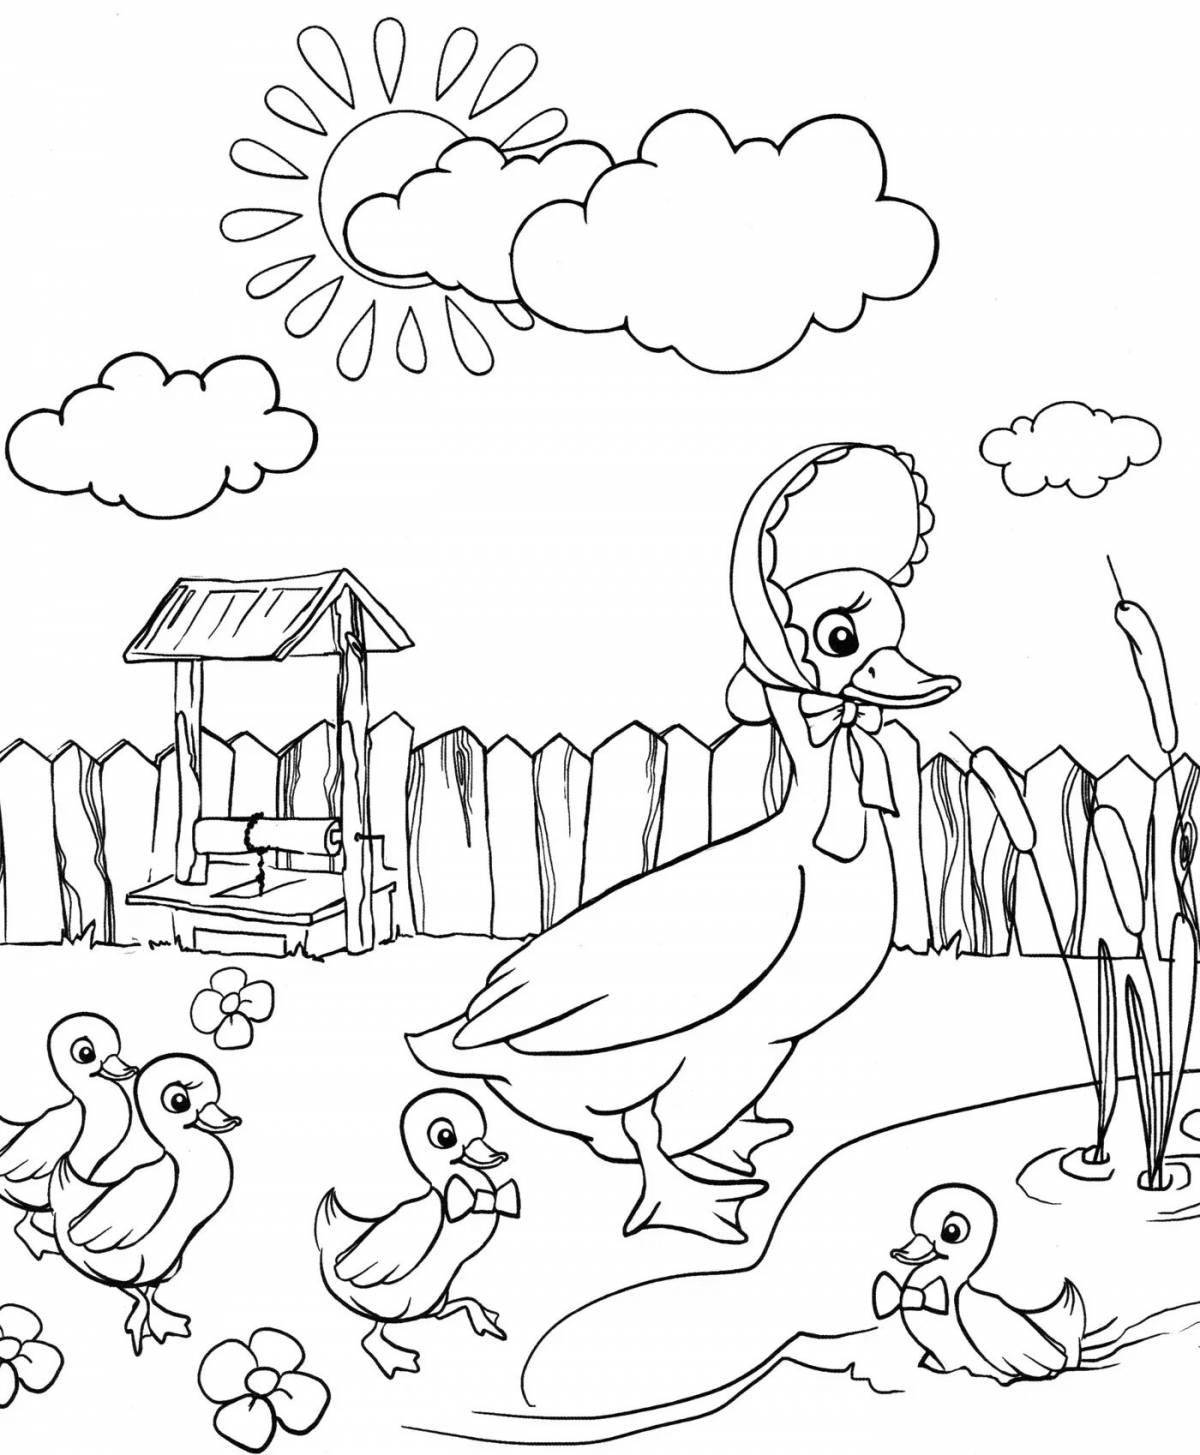 Playful bird yard coloring page